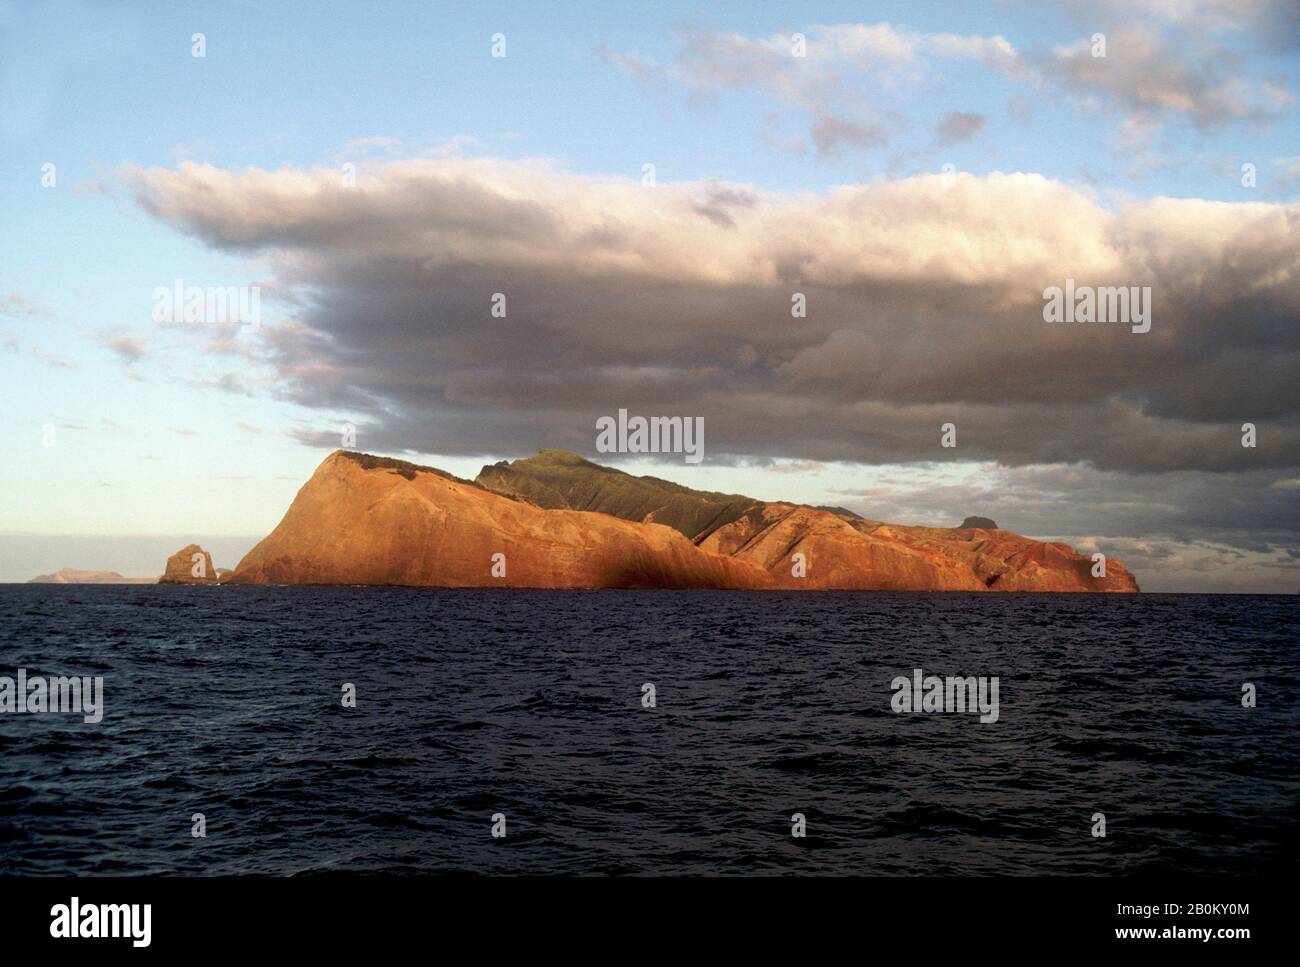 CHILE, JUAN FERNANDEZ ISLANDS, VIEW OF SOUTH-EASTERN COAST OF ROBINSON CRUSOE ISLAND FROM SEA Stock Photo